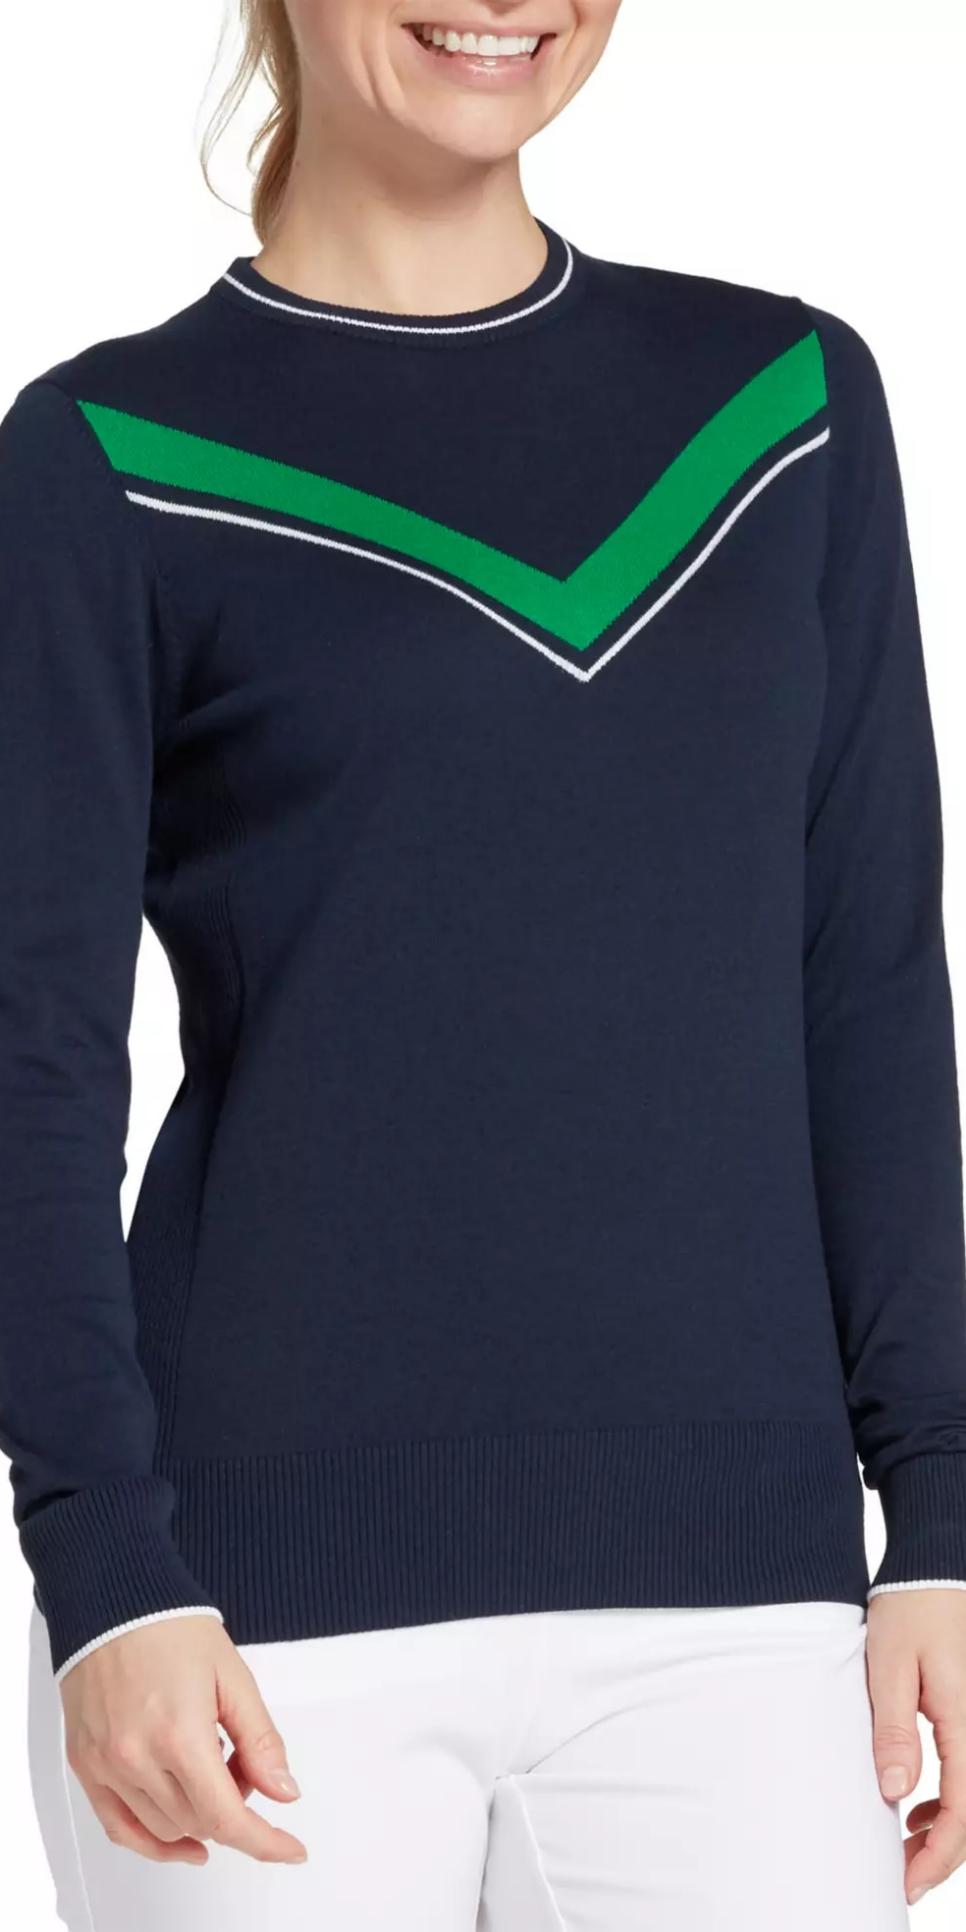 rx-gglady-hagen-womens-green-v-long-sleeve-golf-sweater.jpeg